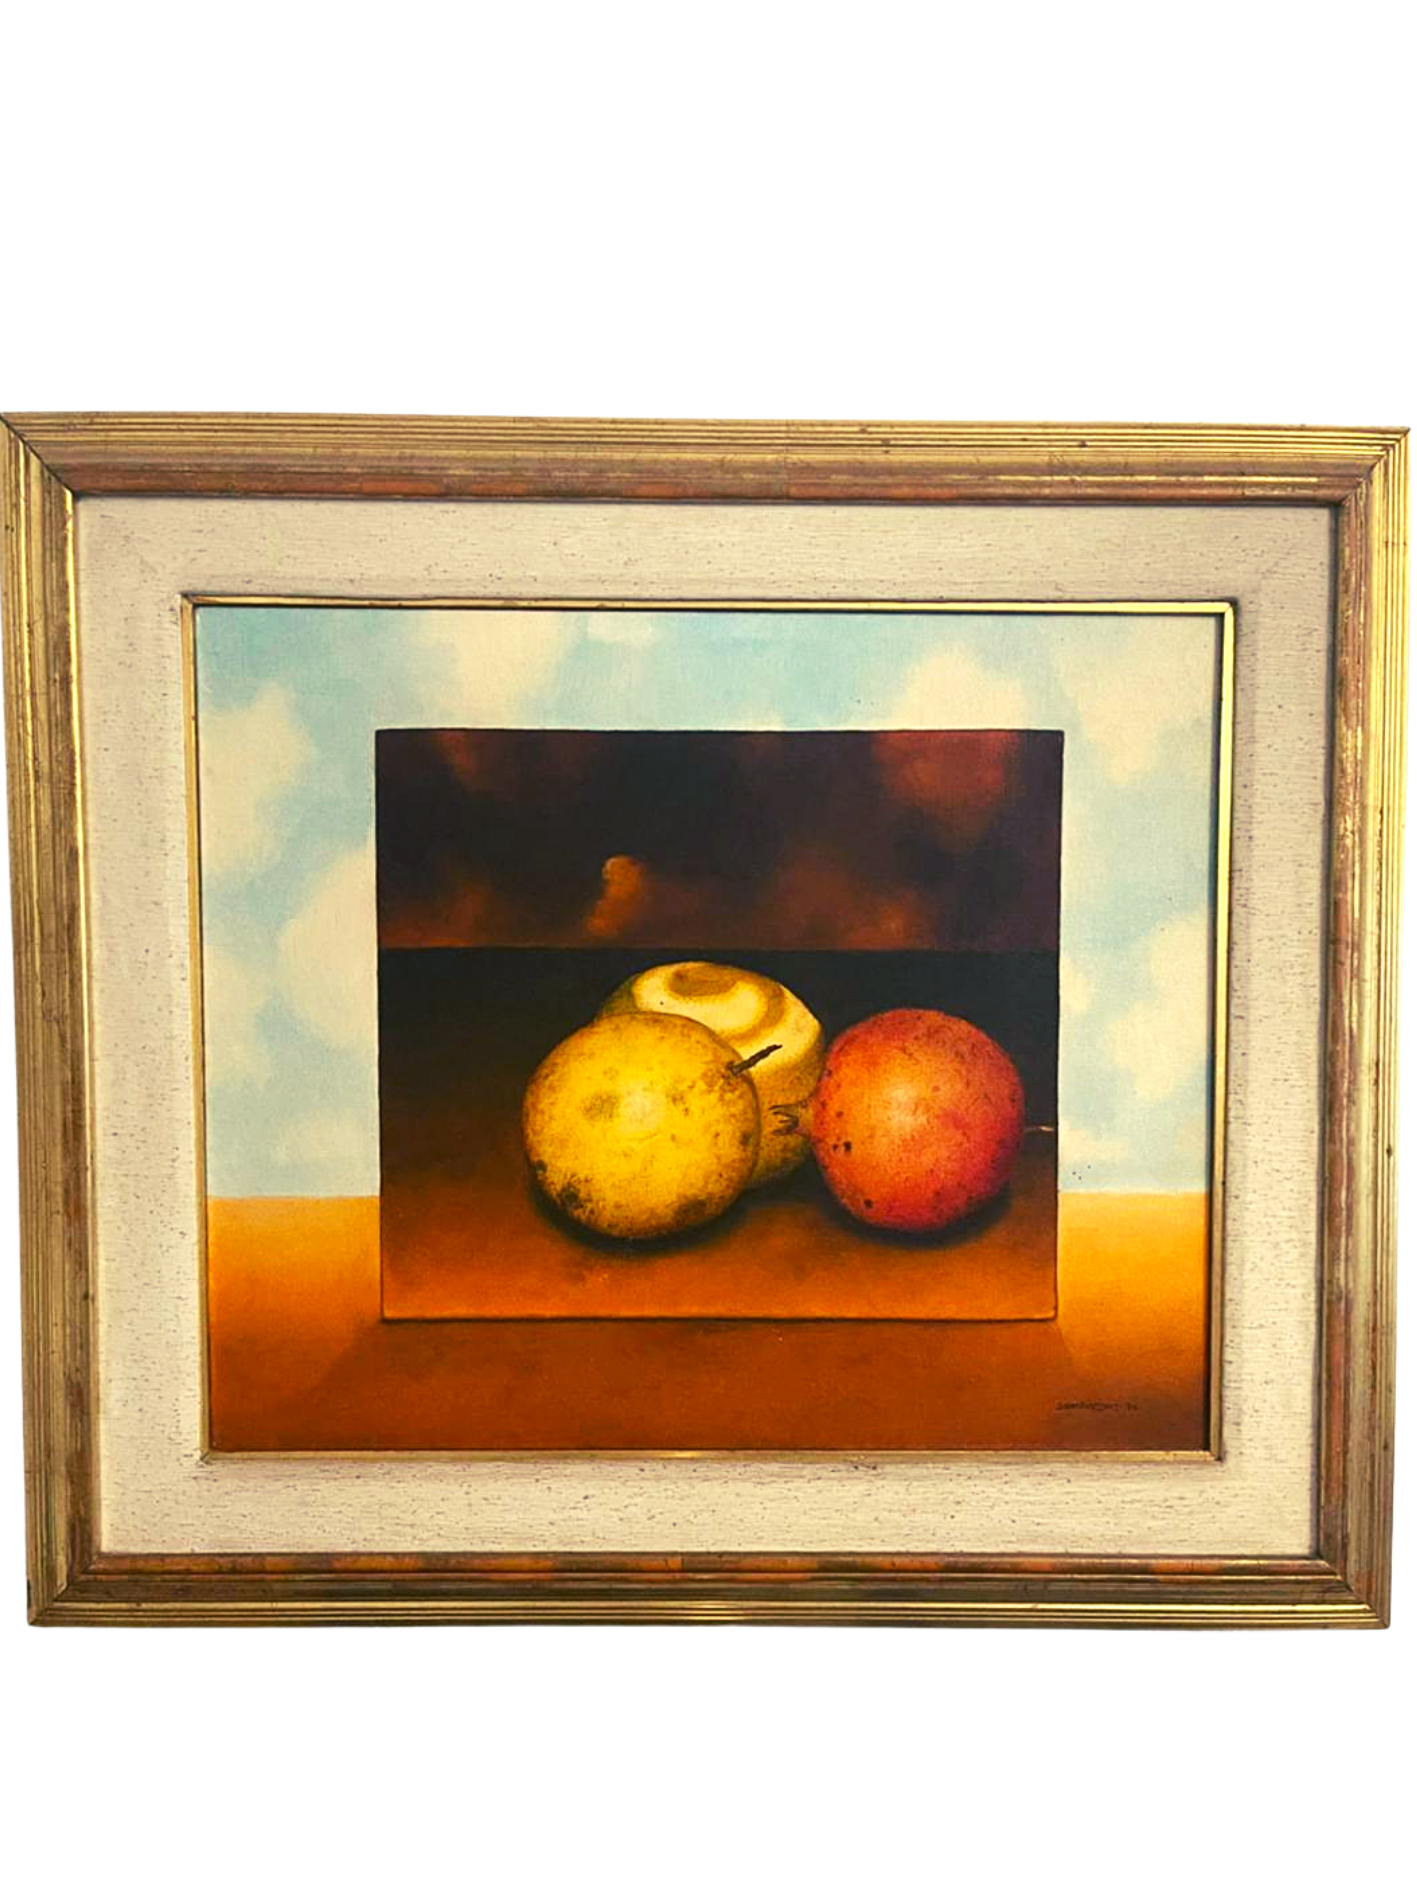 Cuadro de Sebastián Diaz 60 x 50 cm. 3 frutas